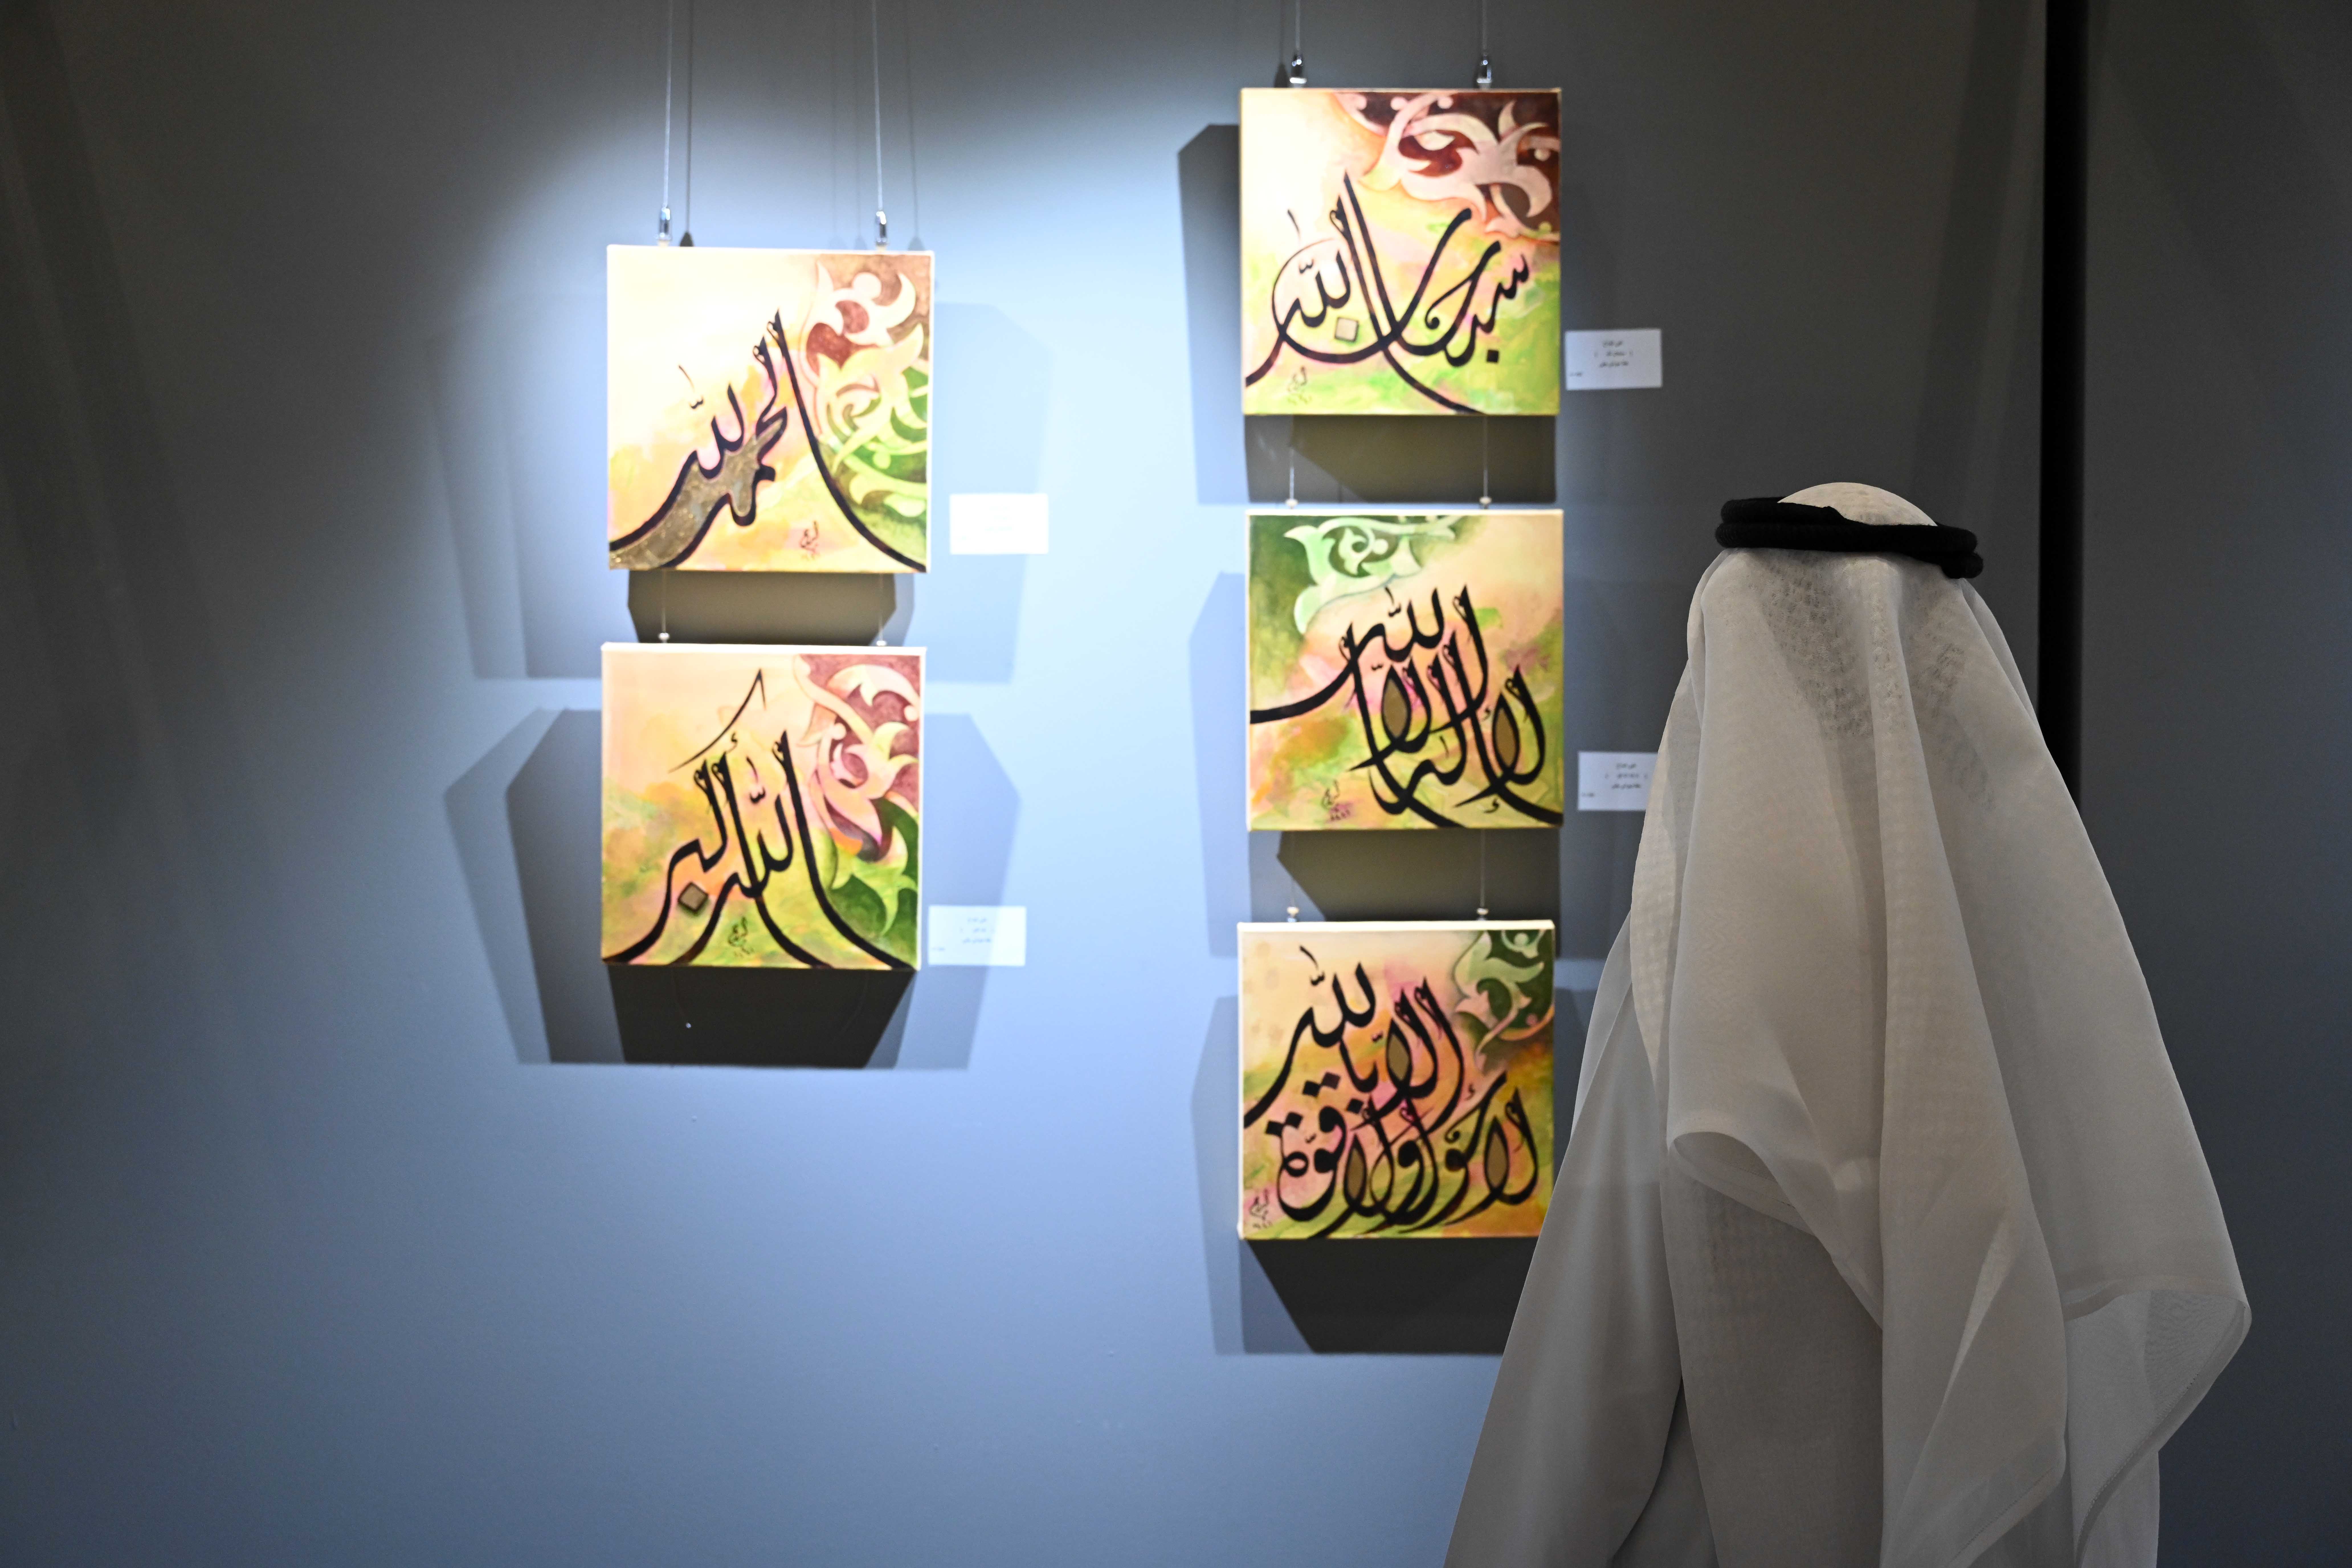 KUWAIT CITY, Seorang pria mengunjungi sebuah pameran bertajuk "Arabic Calligraphy" di Museum of Modern Art, di Kuwait City, Kuwait, pada 12 September 2022. (Xinhua/Asad)